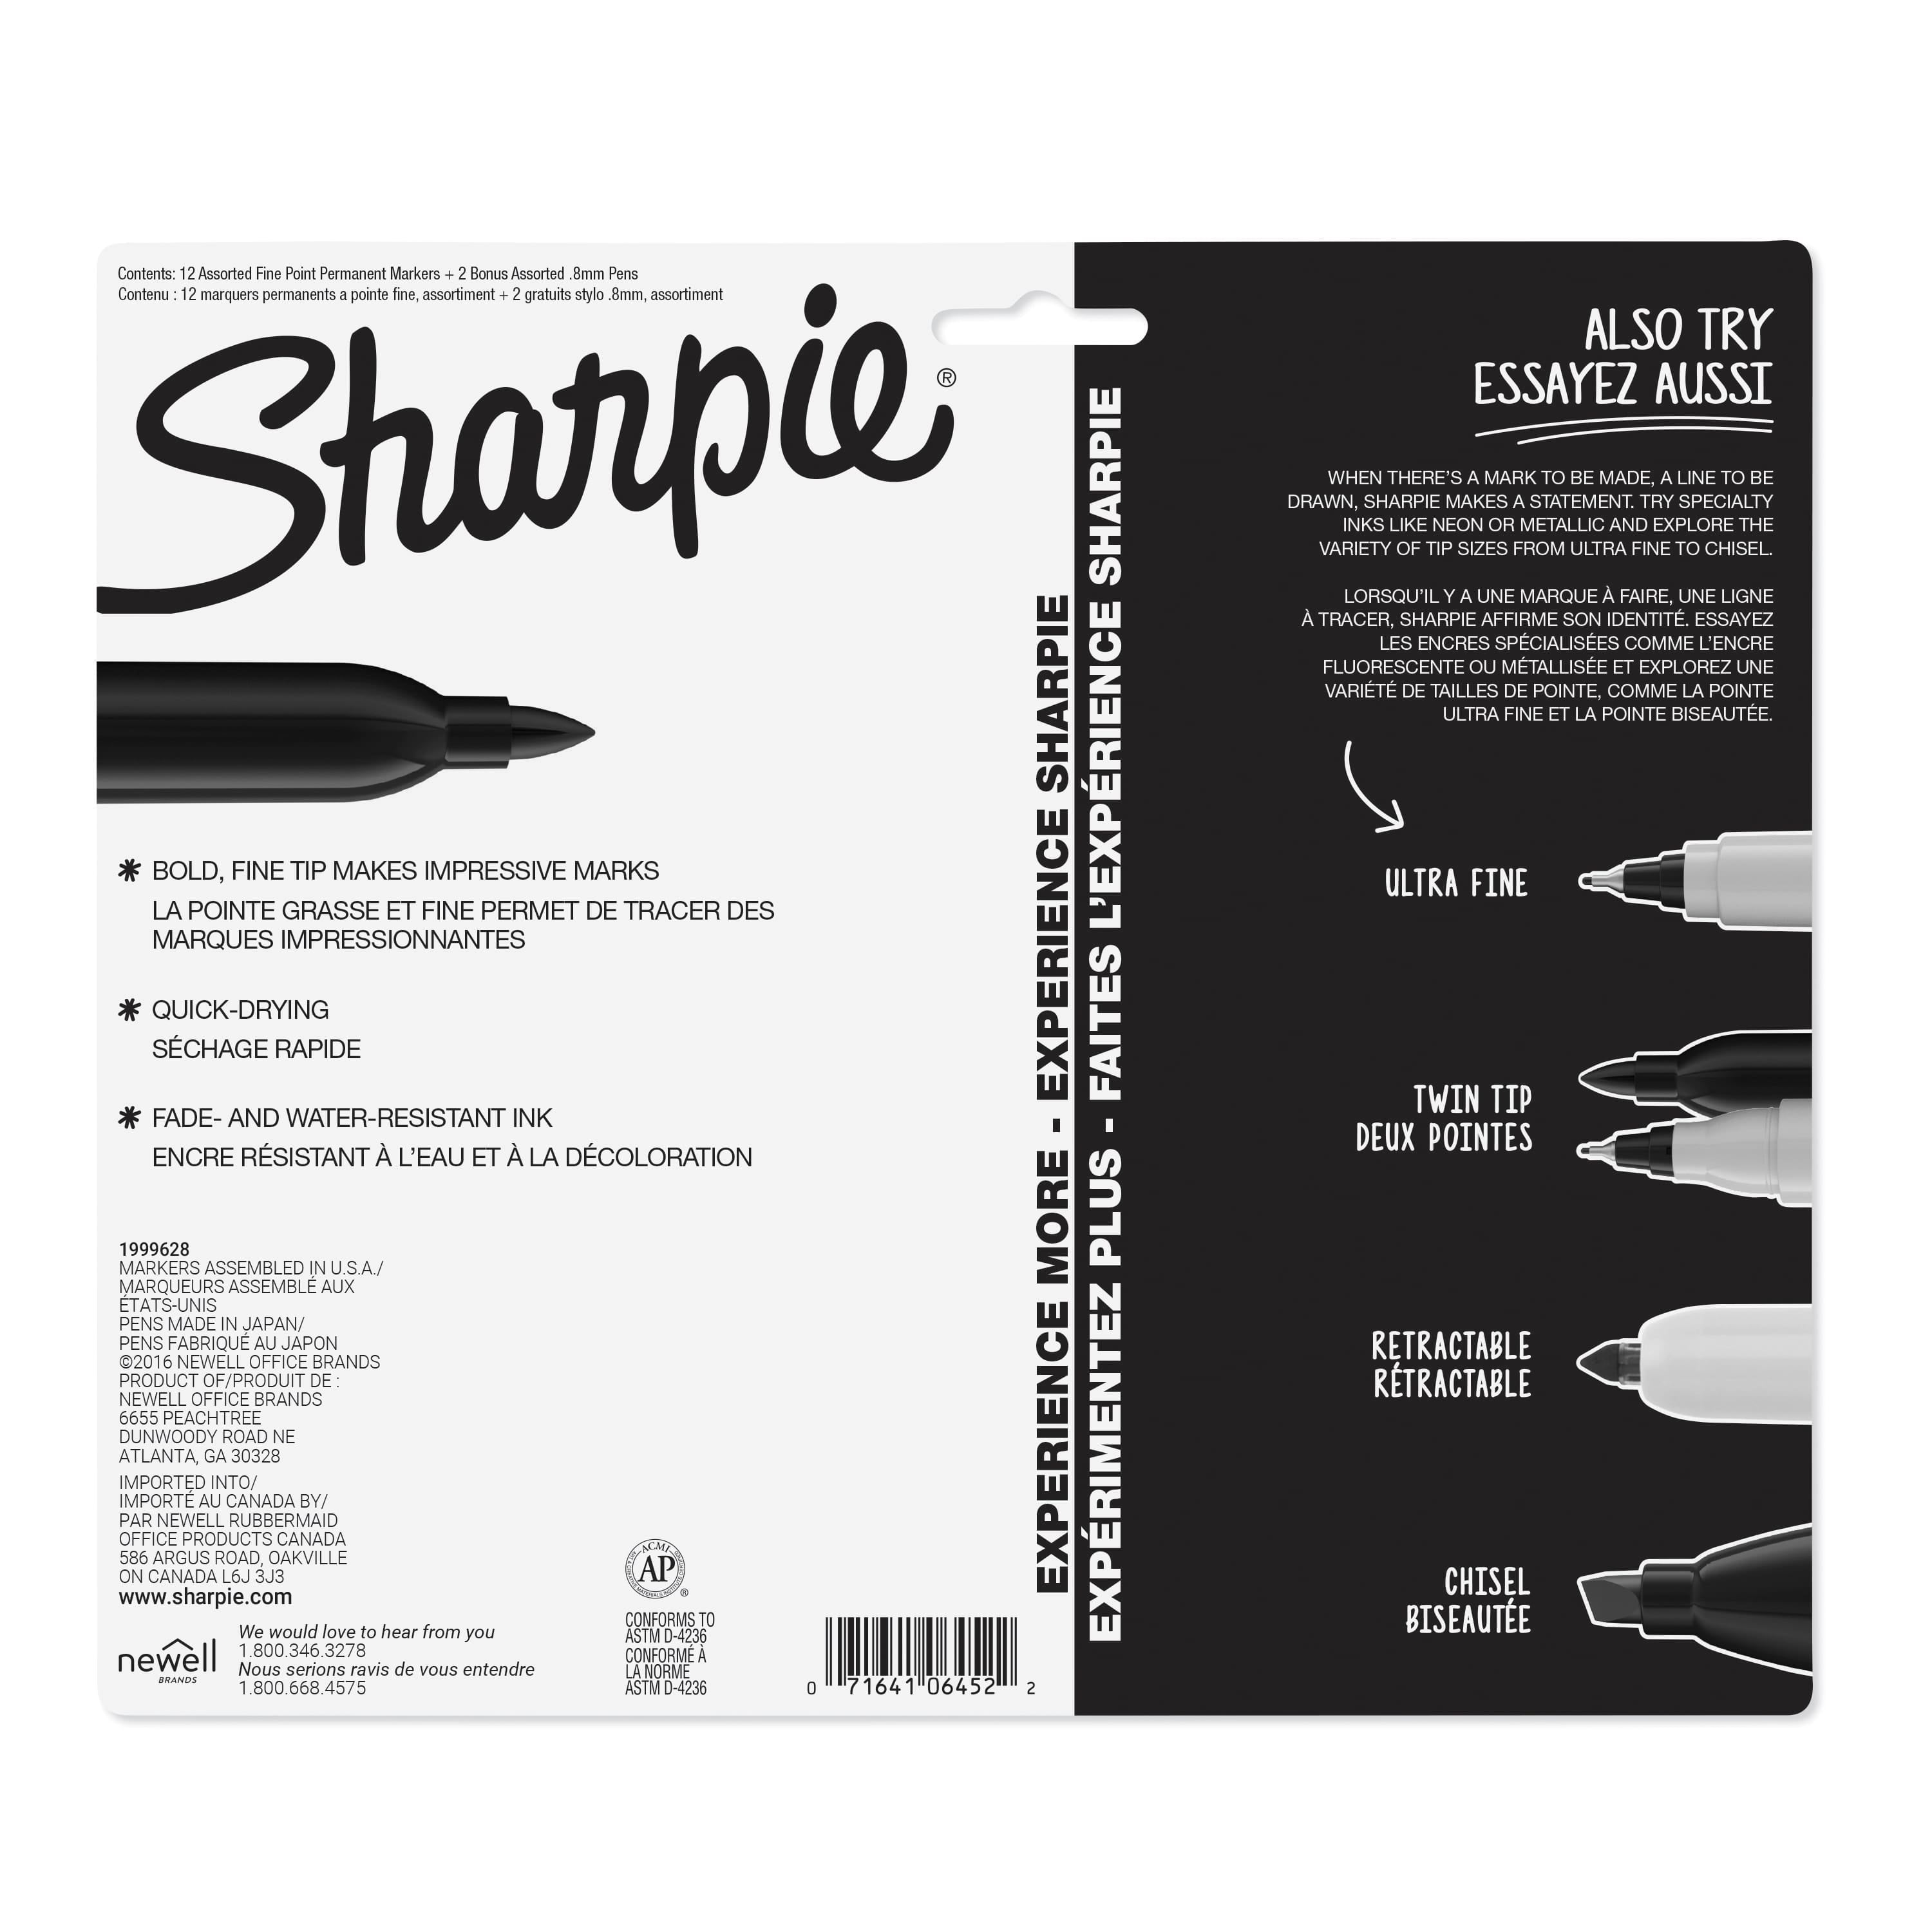 6 Packs: 14 ct. (84 total) Sharpie® Fine Point Markers & Bonus